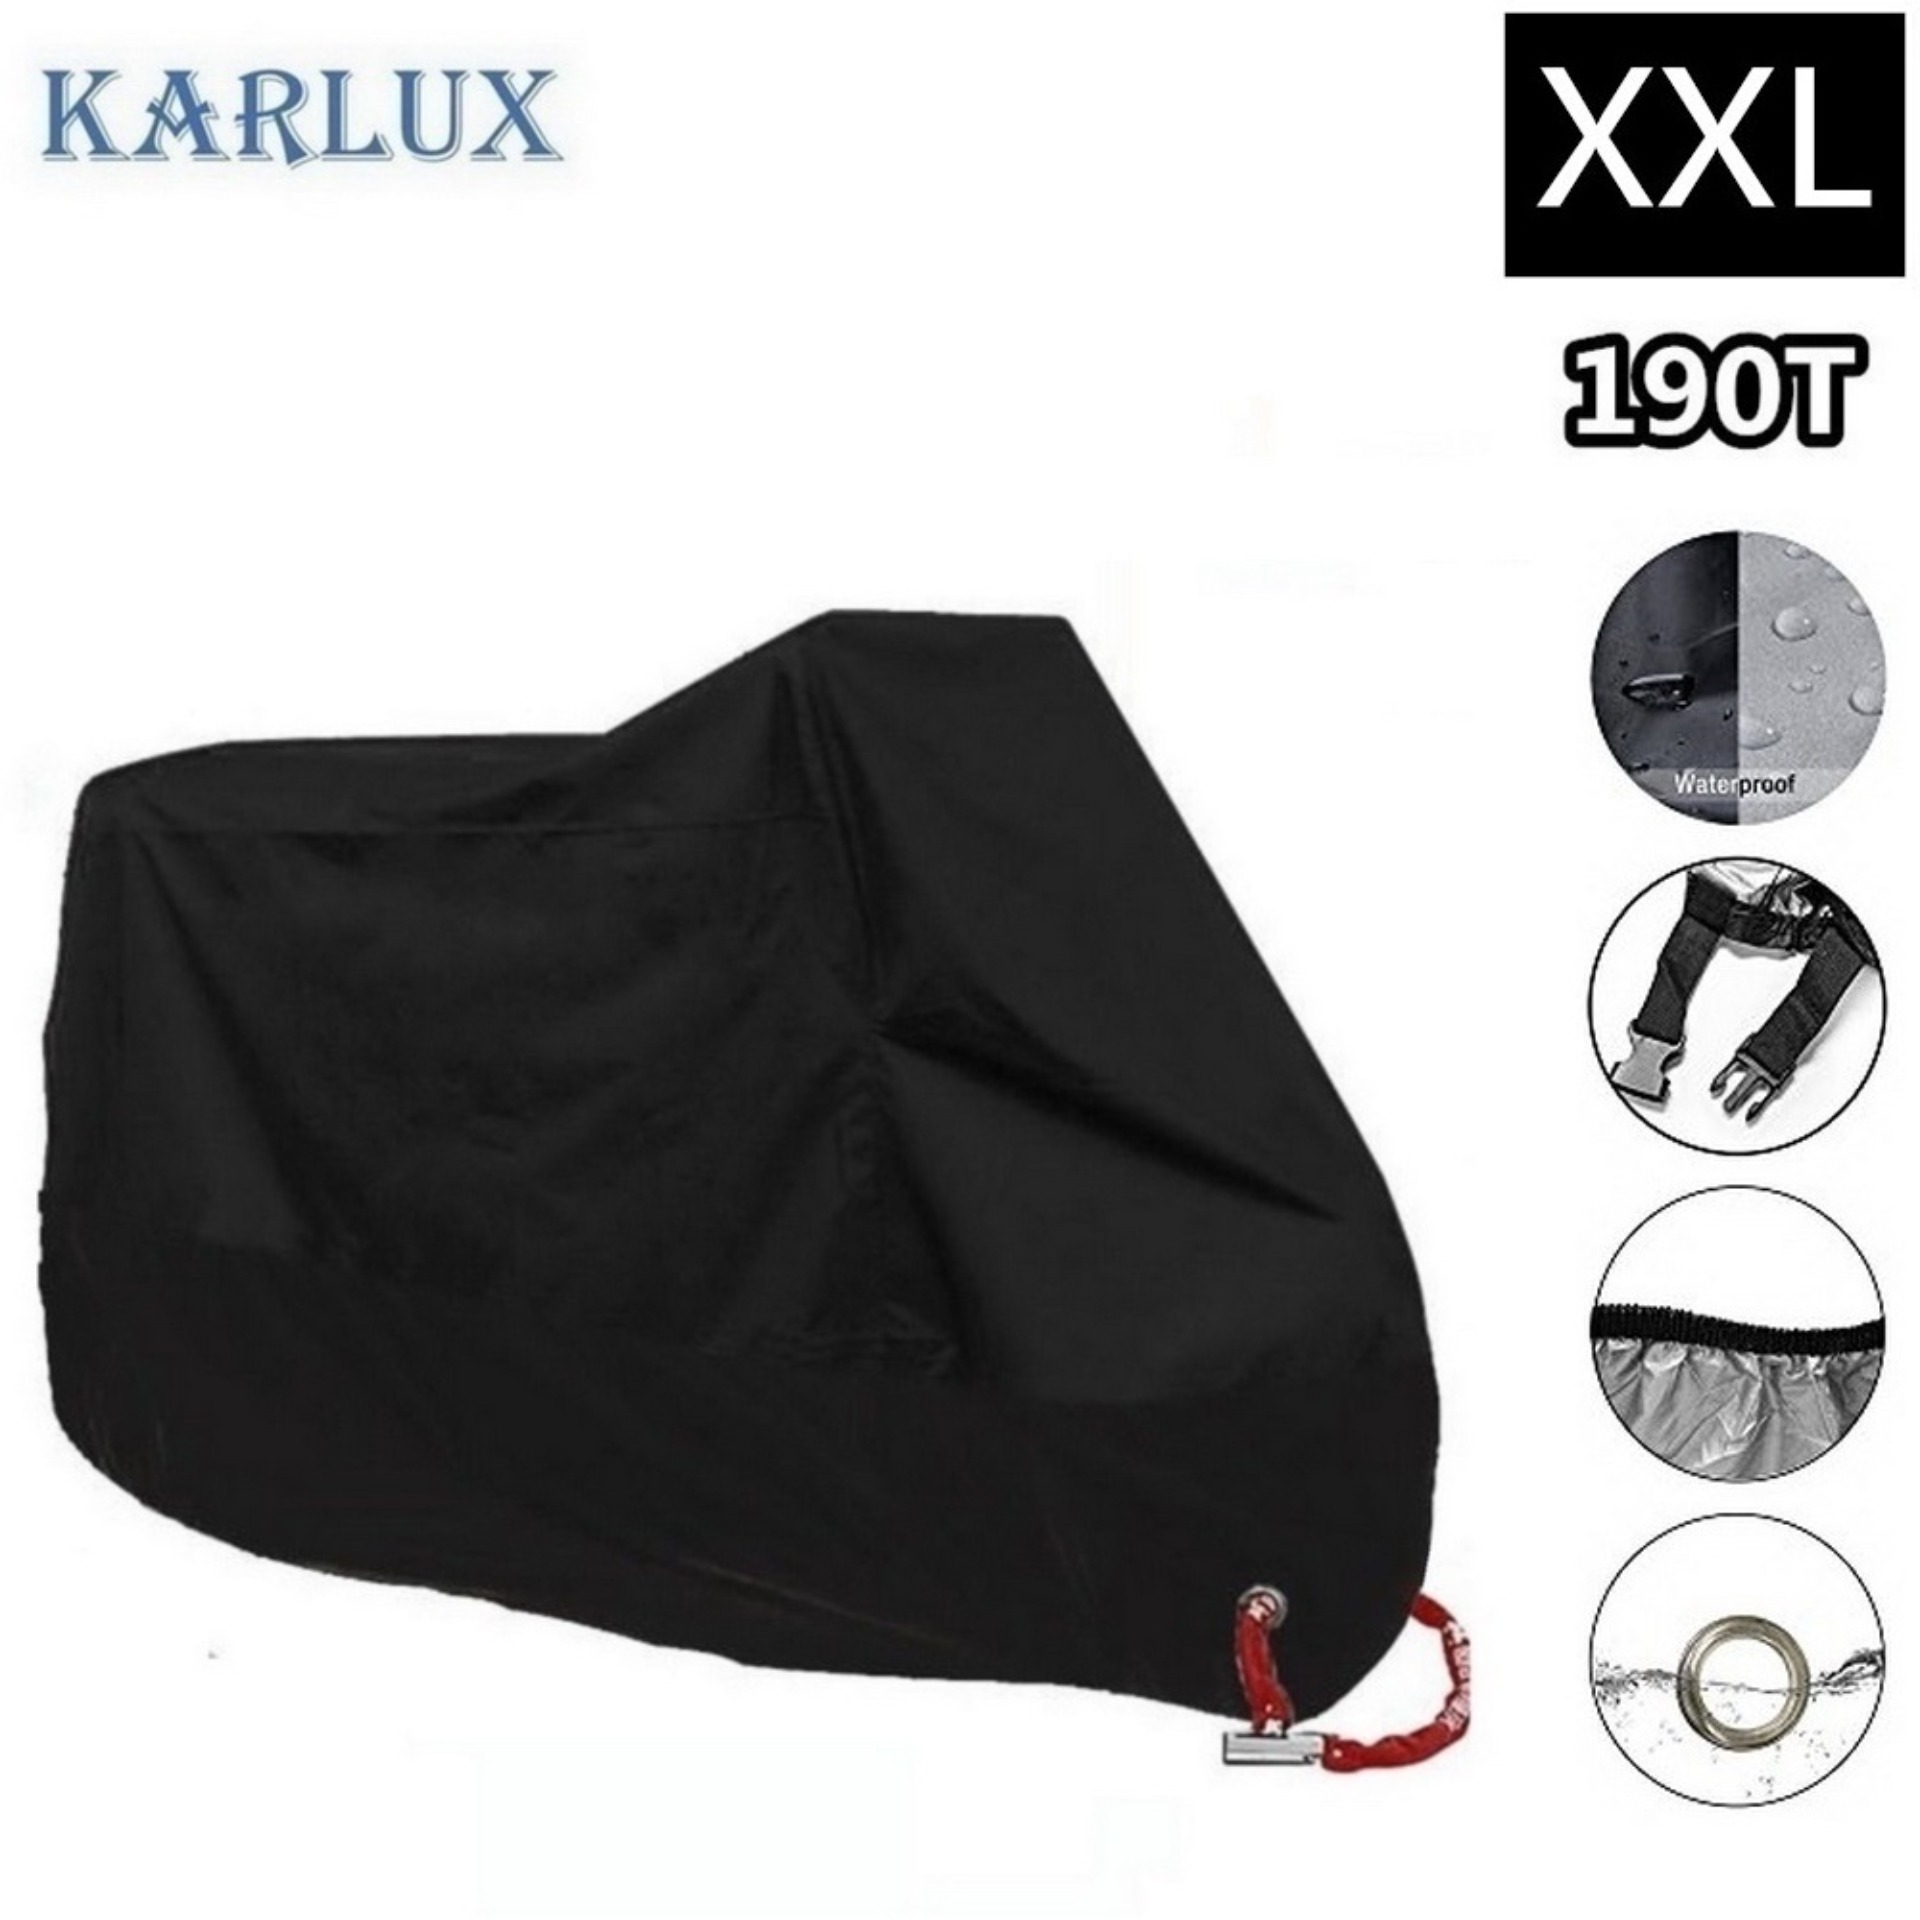 Karlux XXL (2L) ผ้าคลุมรถมอเตอร์ไซค์ บิ๊กไบค์ จักยาน กันน้ำ กันแดด กันฝุ่น สีดำ Black Motorbike Waterproof Cover Protector Case Cover Rain Protection Breathable